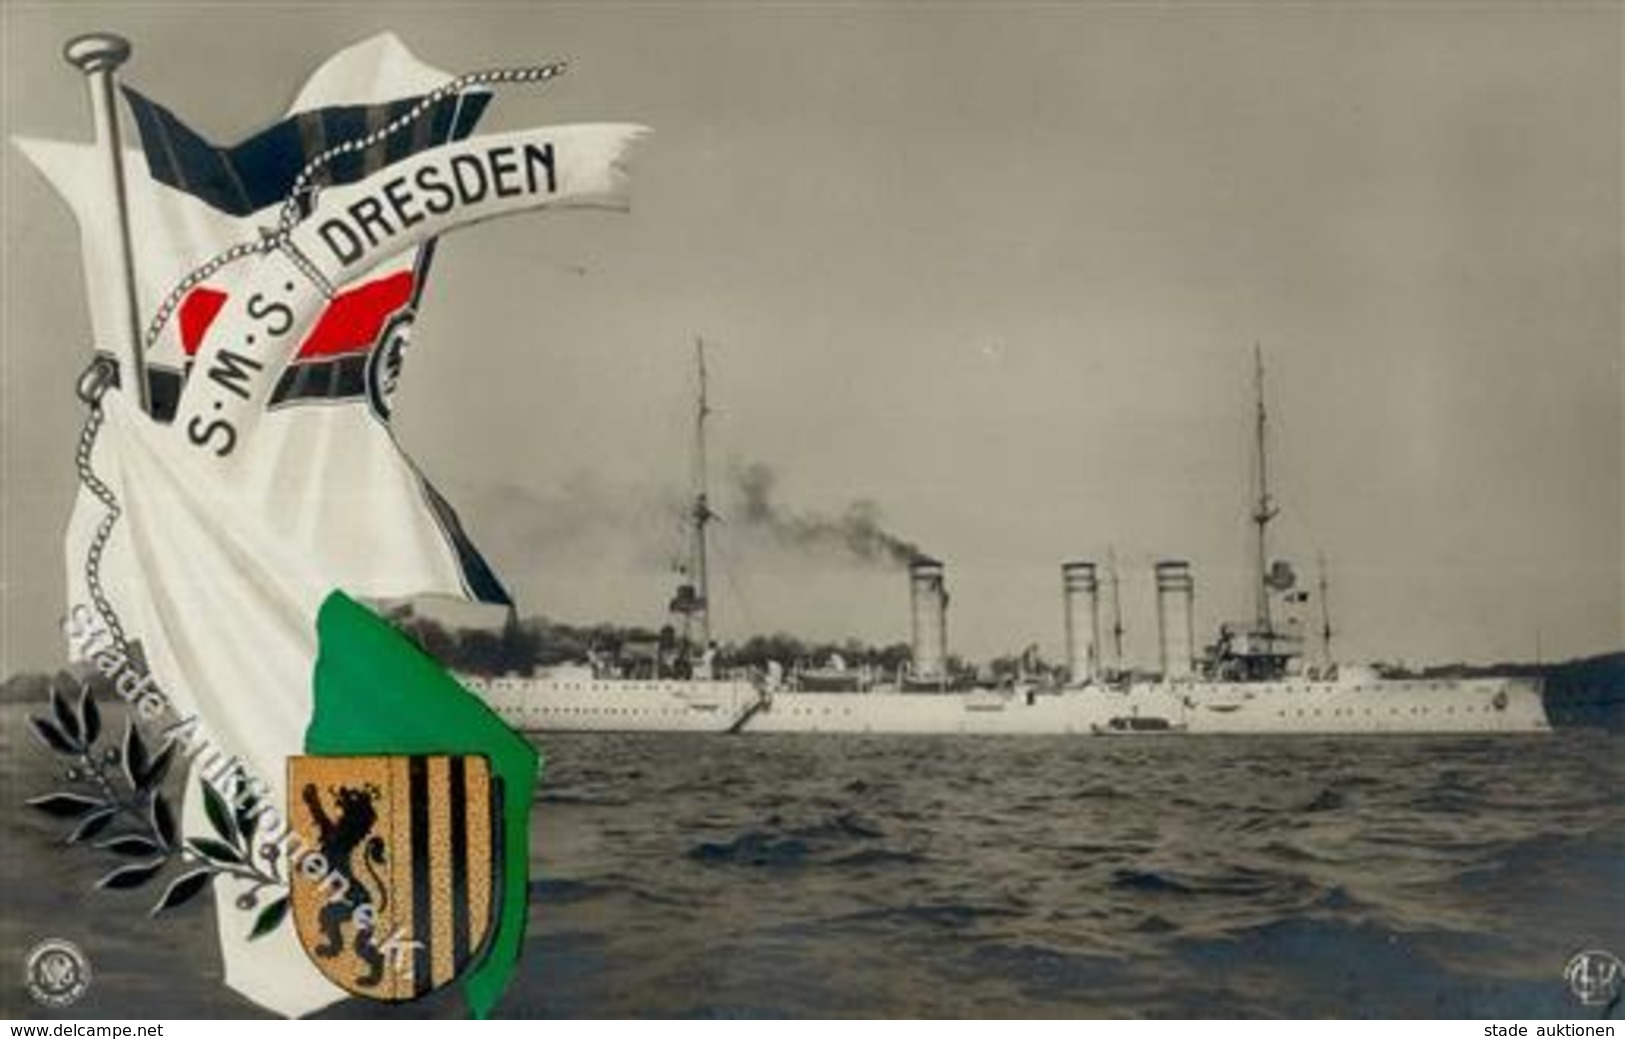 Kriegsschif SMS DRESDEN - (1241b/2) I - Otros & Sin Clasificación